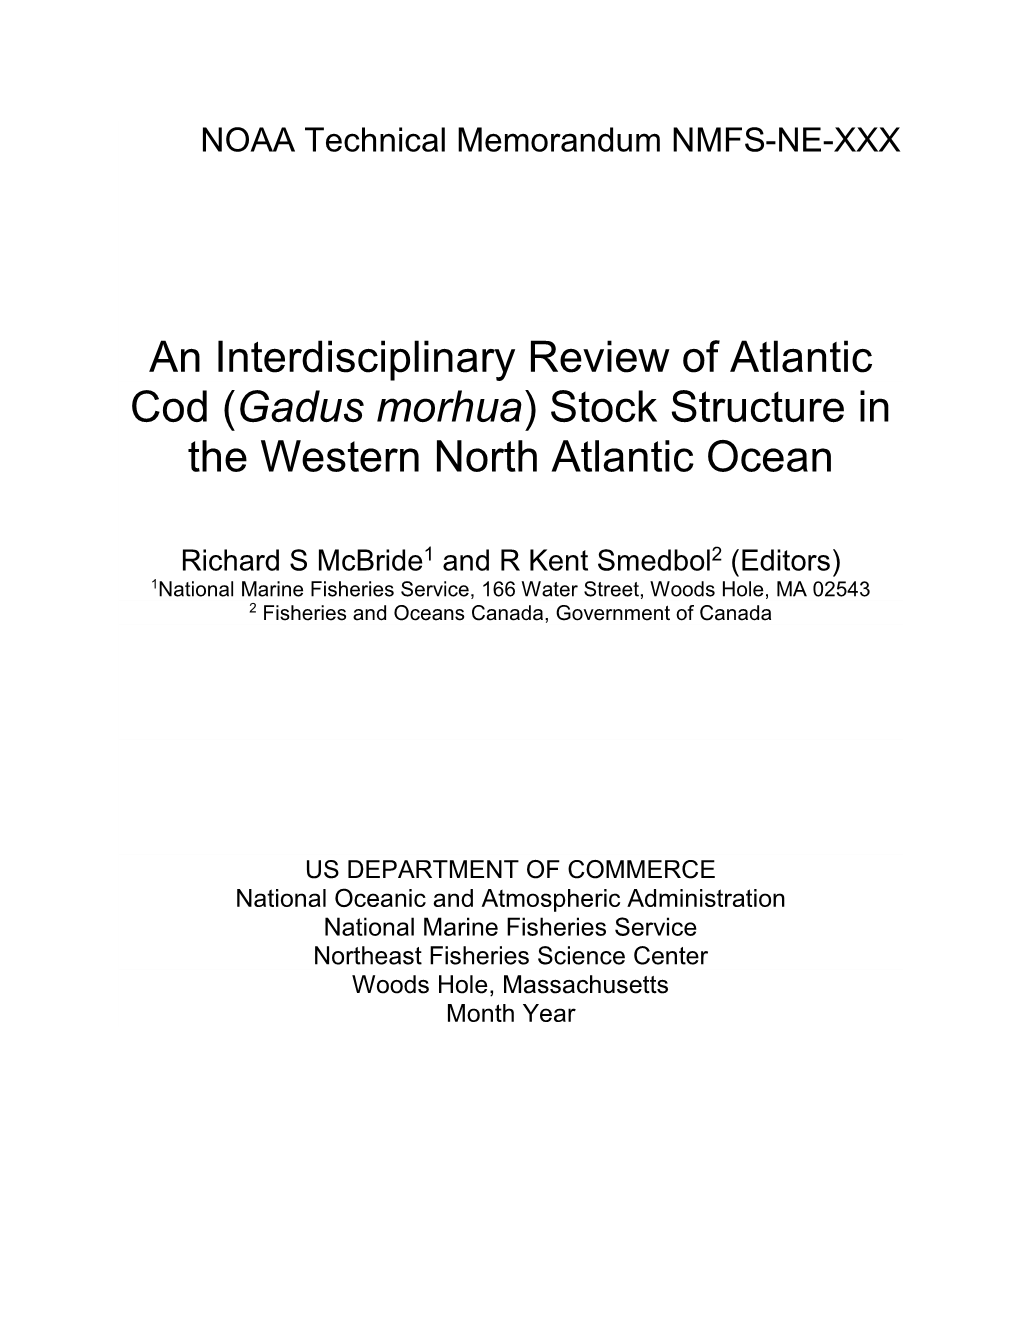 An Interdisciplinary Review of Atlantic Cod (Gadus Morhua) Stock Structure in the Western North Atlantic Ocean